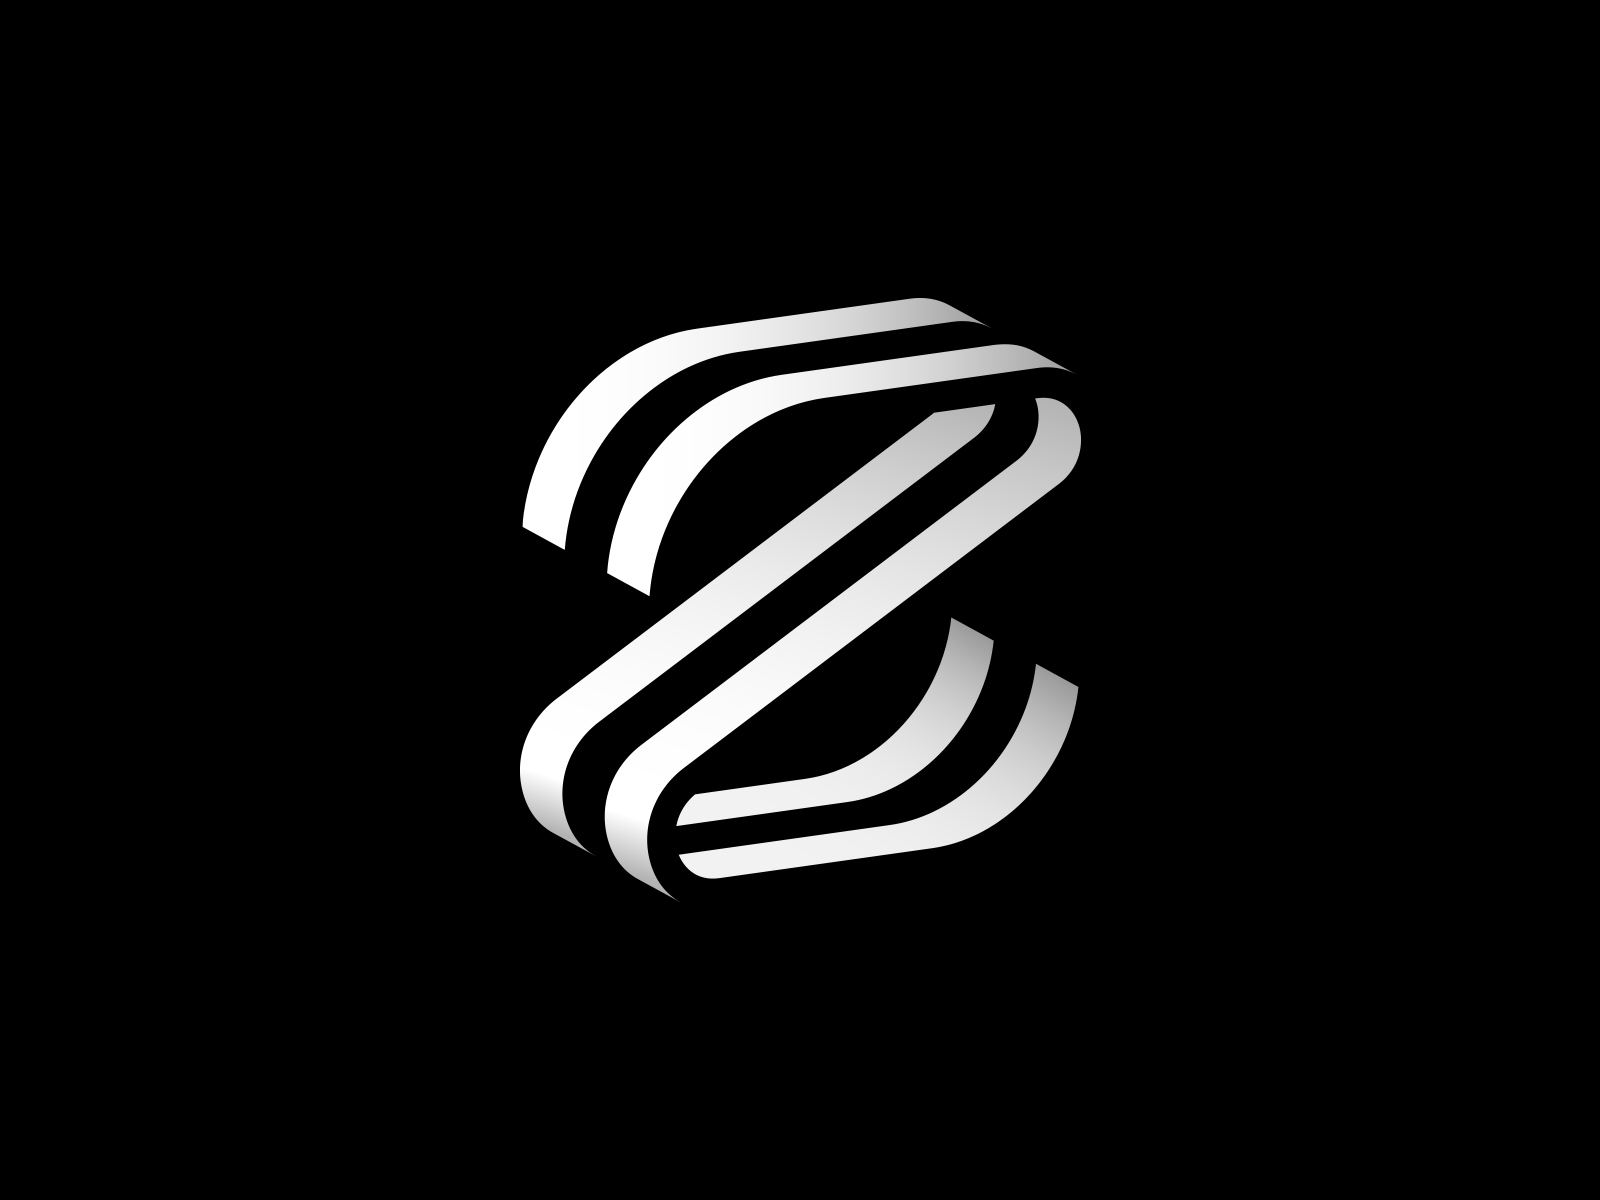 Z Letter Mark / Logo by Aditya Chhatrala on Dribbble